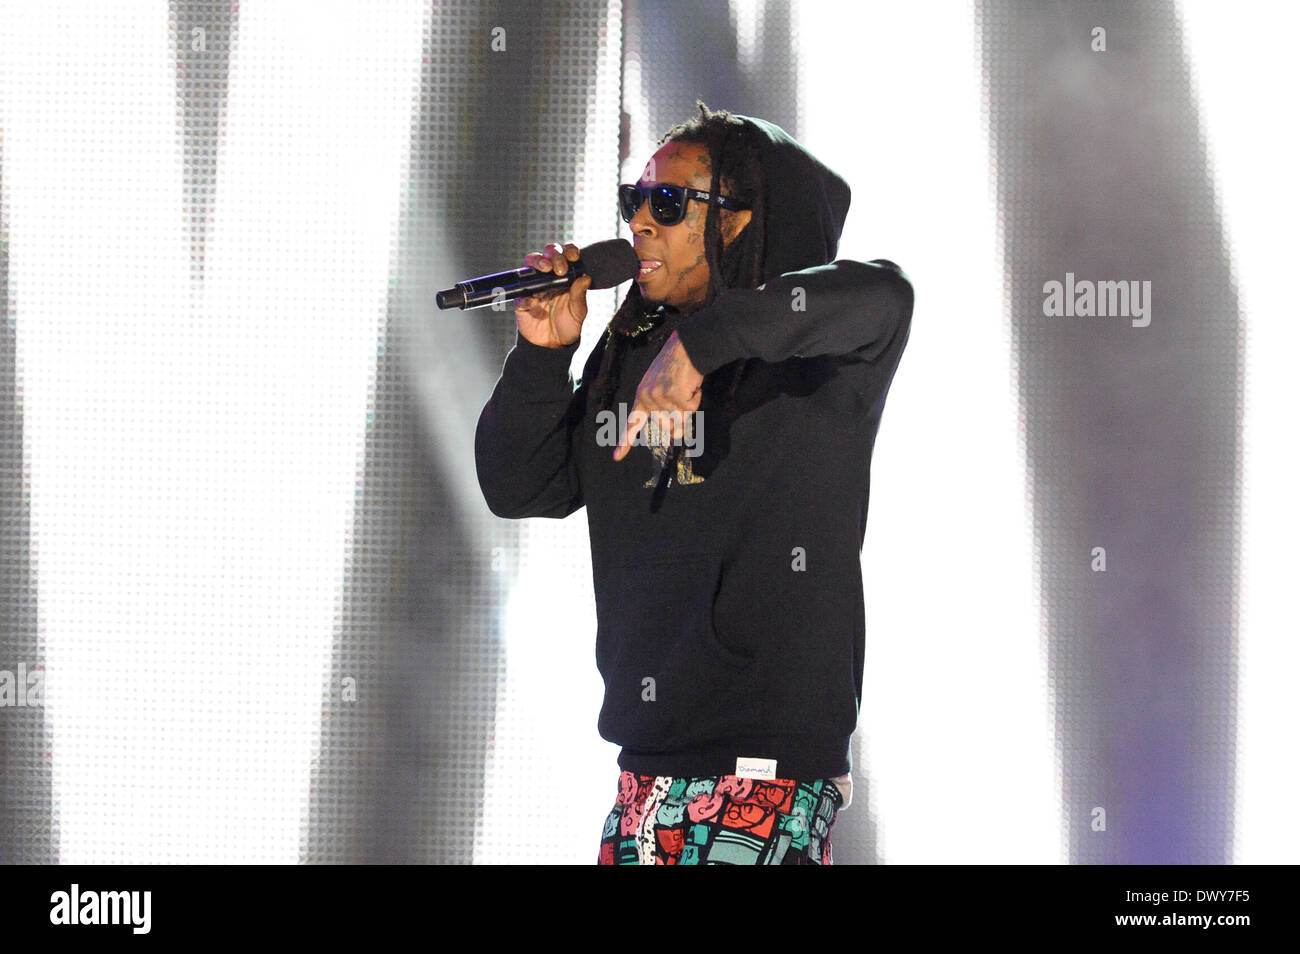 Austin, Texas, USA. 13th Mar, 2014. Lil Wayne greets the audience at the start of the mtvU Woodie Awards during SXSW on March 13, 2014 in Austin, Texas - USA. Credit:  Manuel Nauta/NurPhoto/ZUMAPRESS.com/Alamy Live News Stock Photo